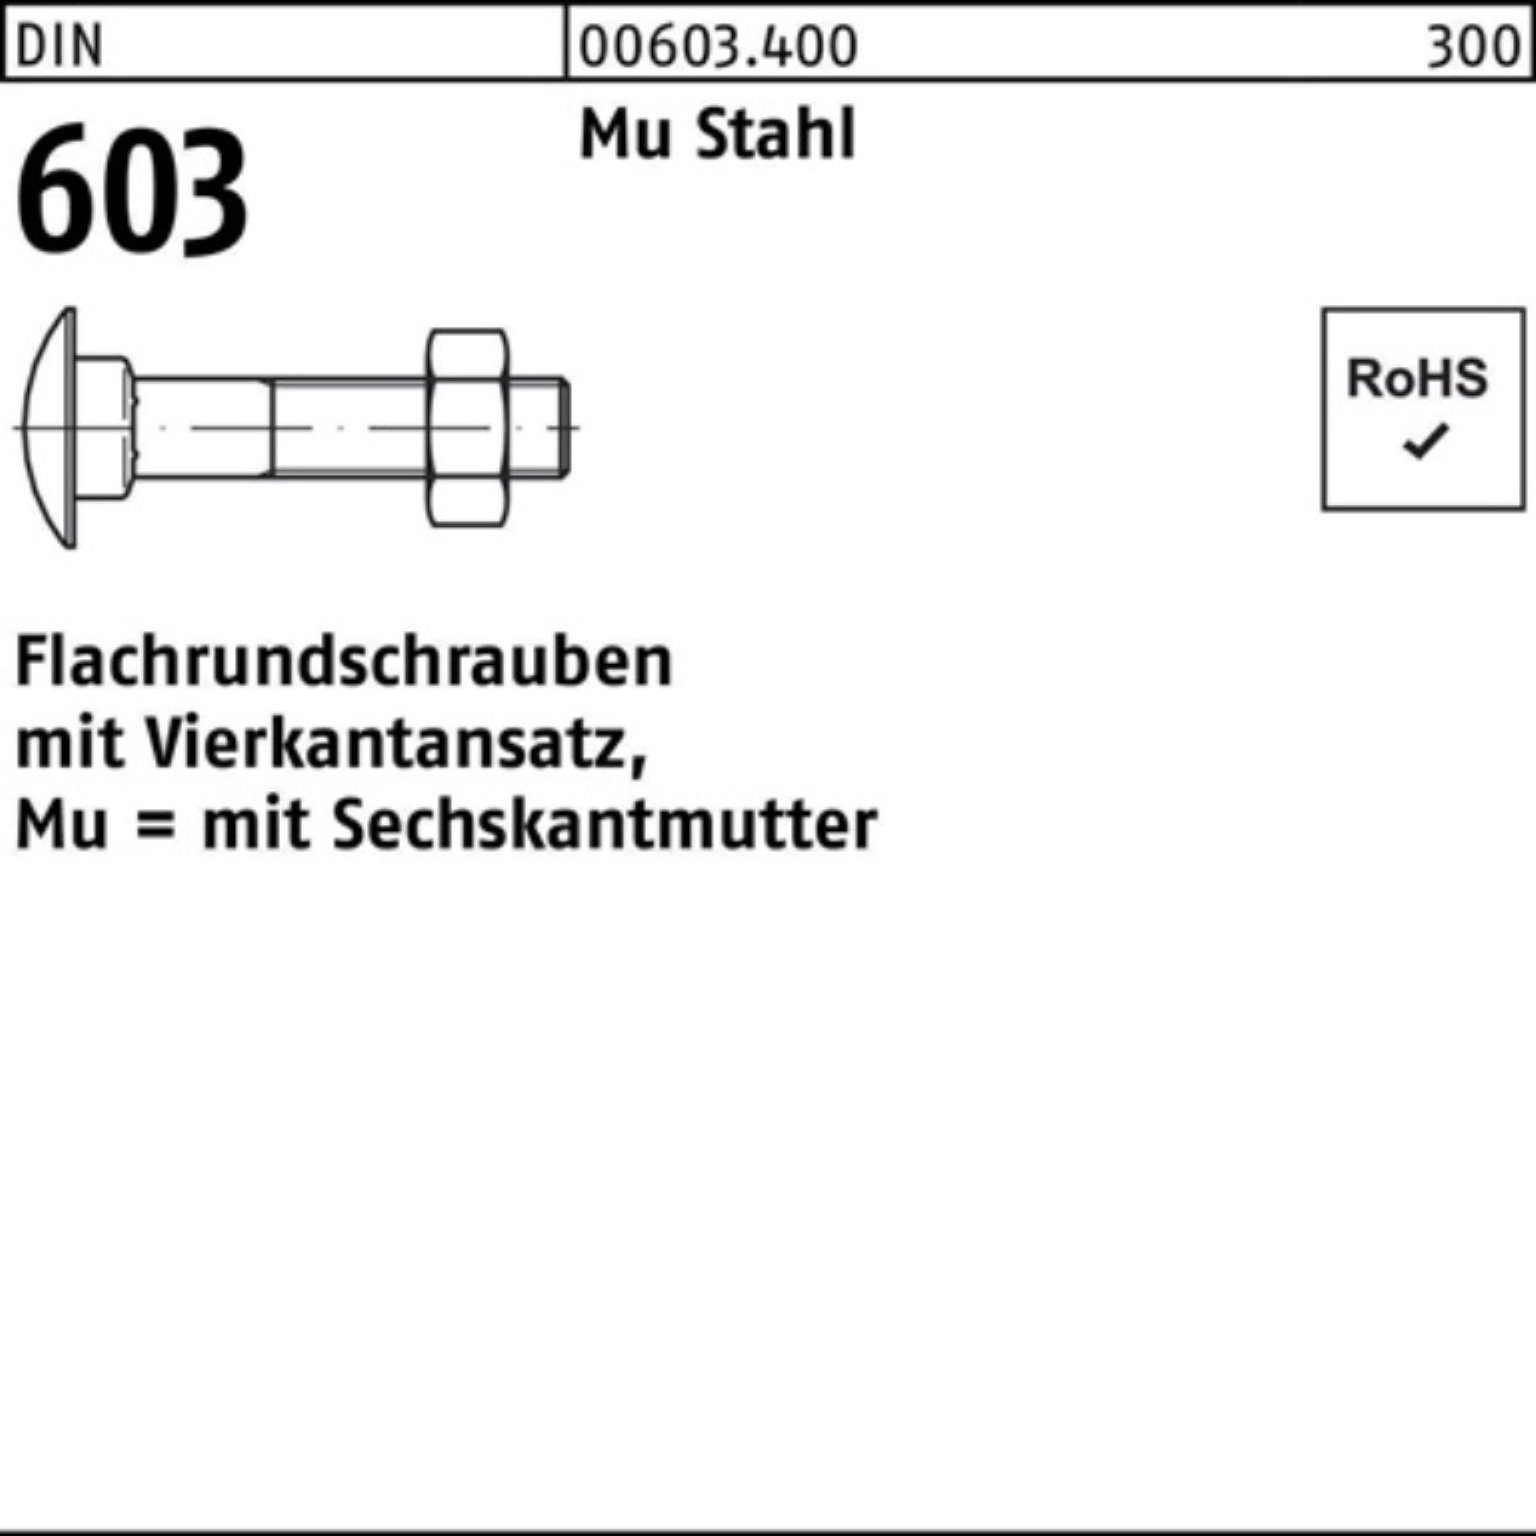 DIN Vierkantansatz/6-ktmutter M Pack Flachrundschraube Reyher 200er Schraube M6x55 603